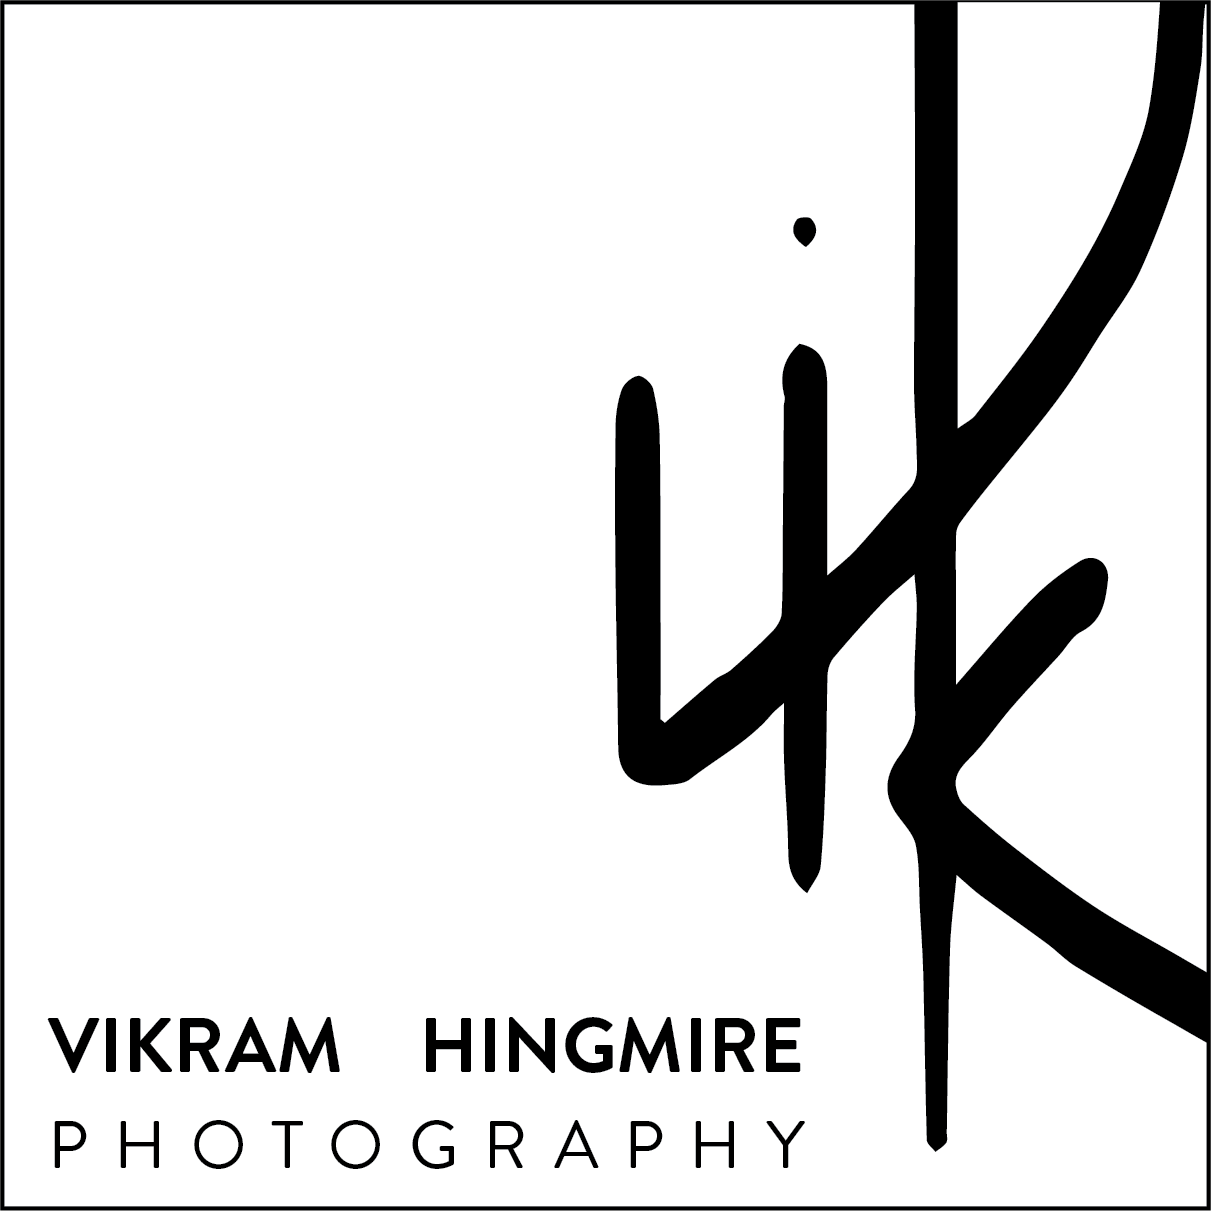 Vikram Verma Projects :: Photos, videos, logos, illustrations and branding  :: Behance